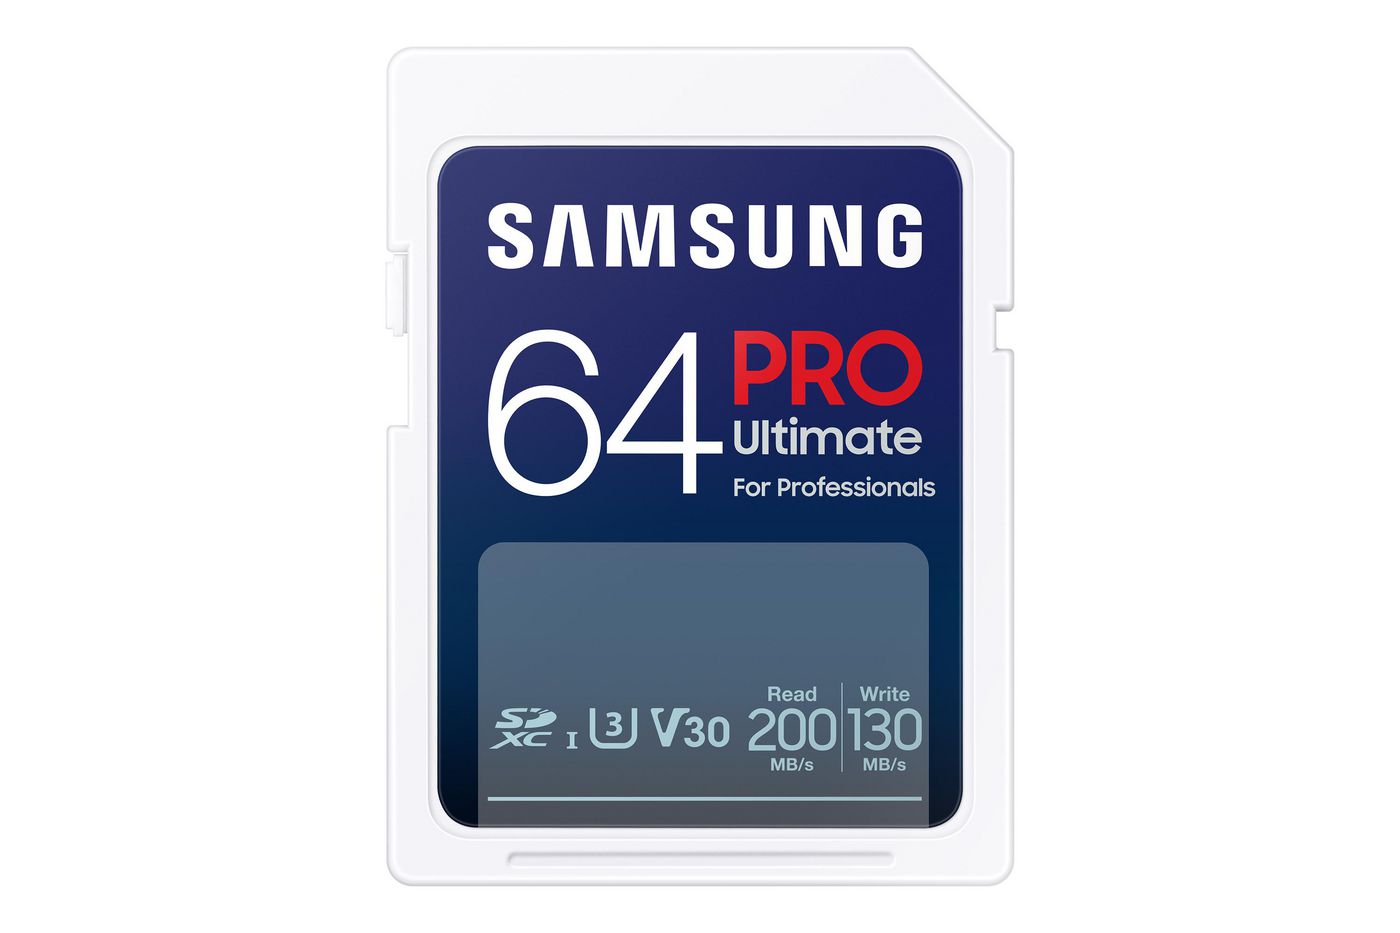 SAMSUNG SD PRO Ultimate 64GB